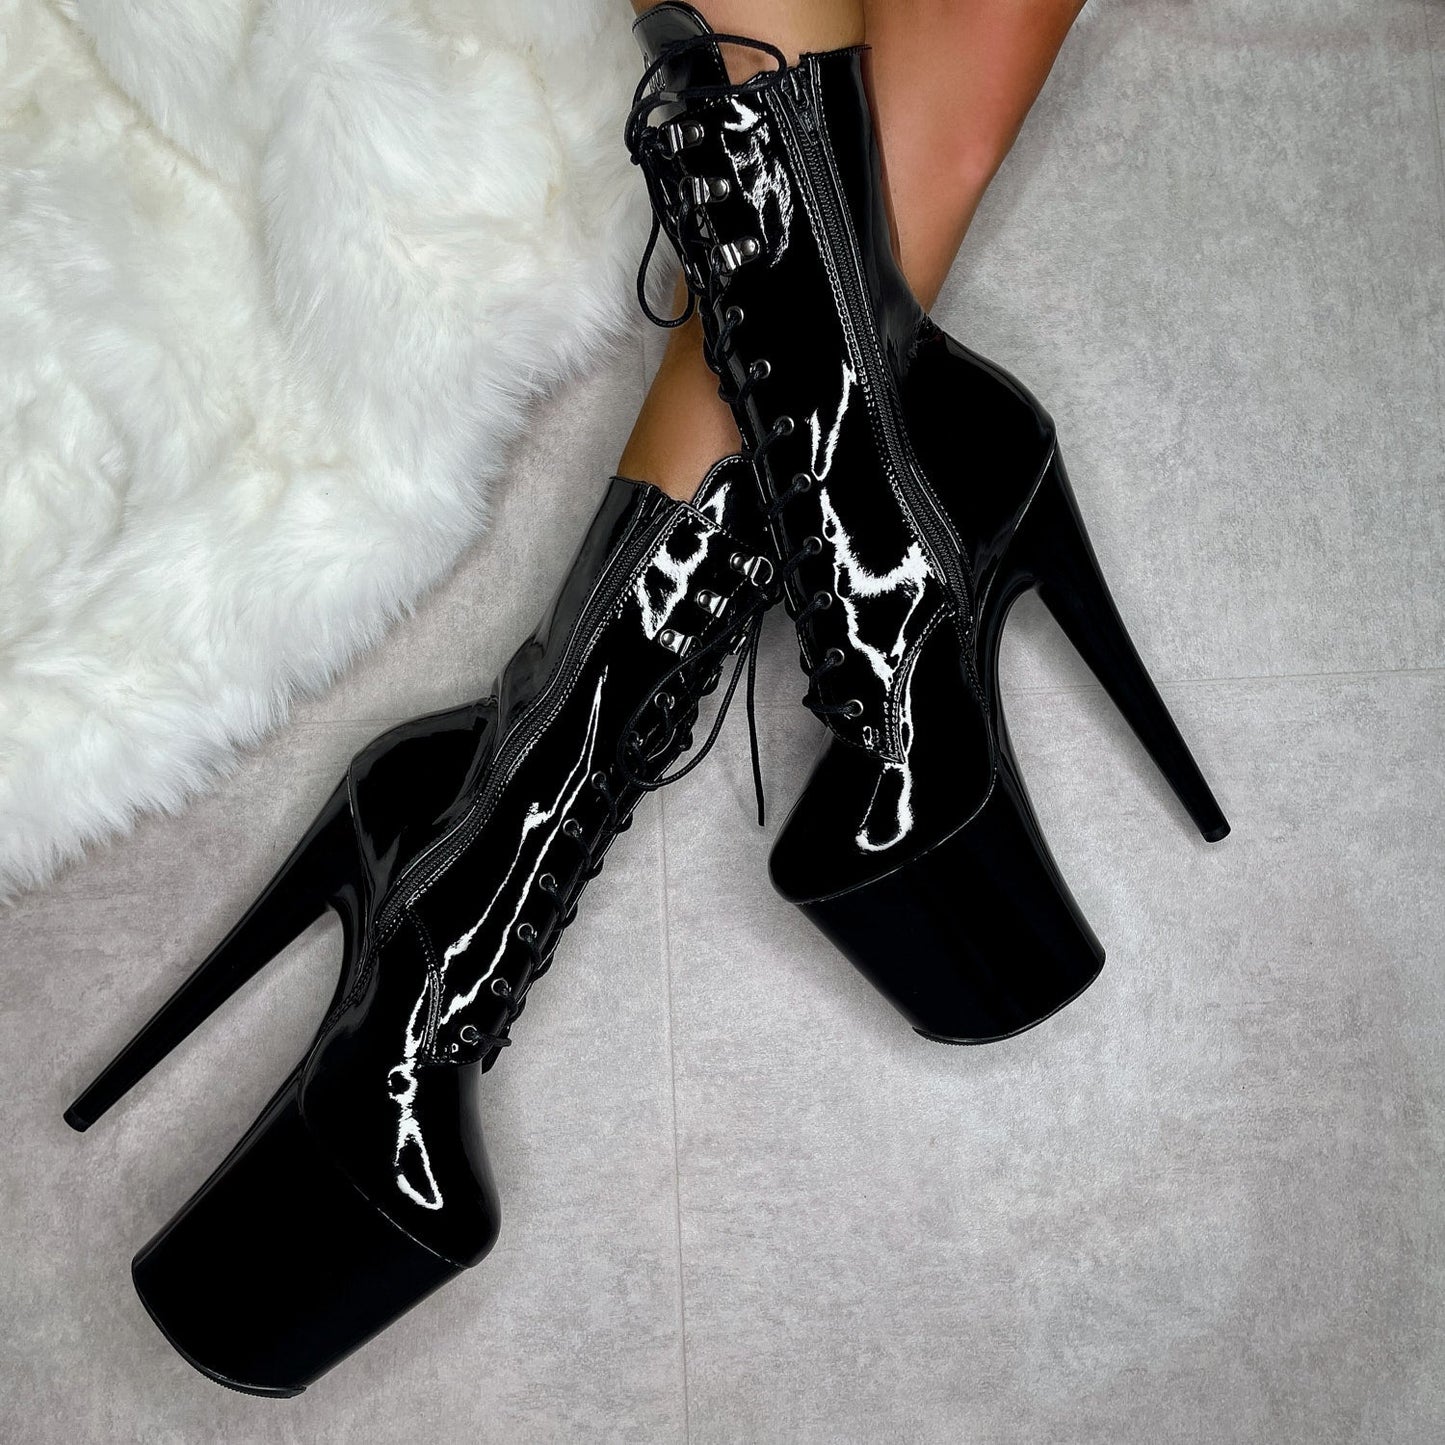 Black Beatle Boot - 8 INCH, stripper shoe, stripper heel, pole heel, not a pleaser, platform, dancer, pole dance, floor work